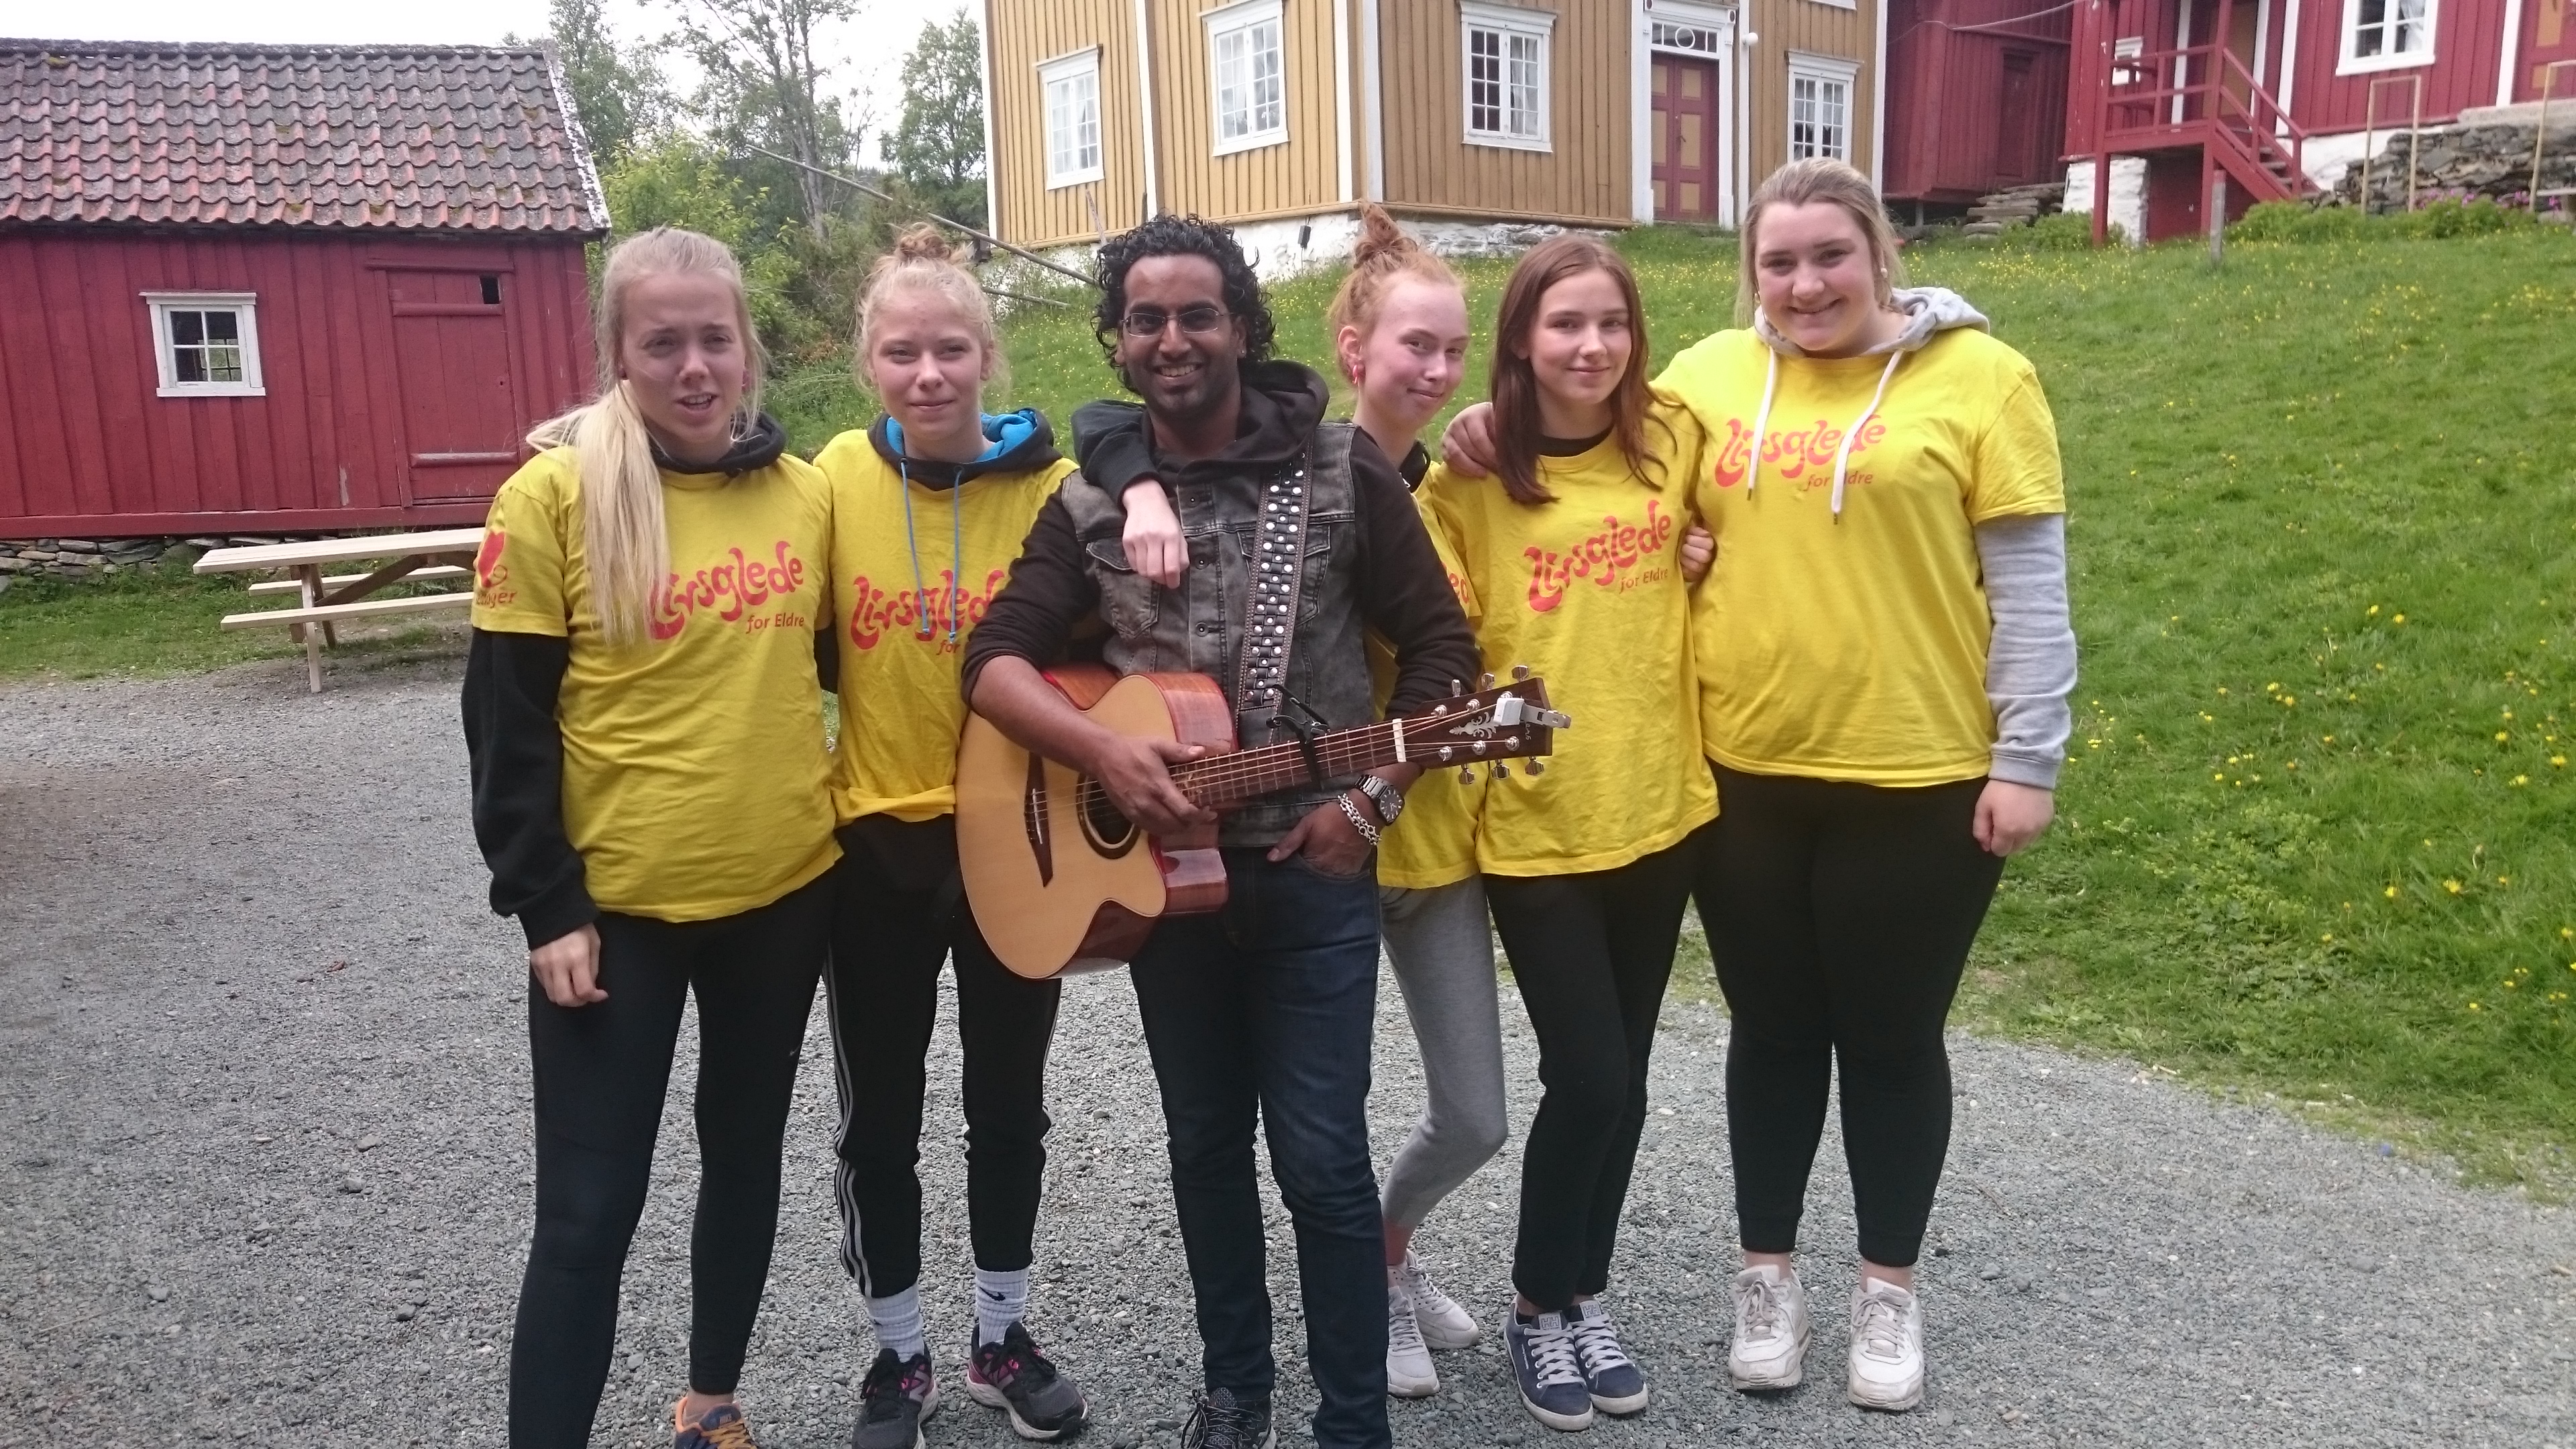 Chand Torsvik overrasket livsgledeelever fra helse- og oppvekstfag på Byåsen videregående skole i Bymarka